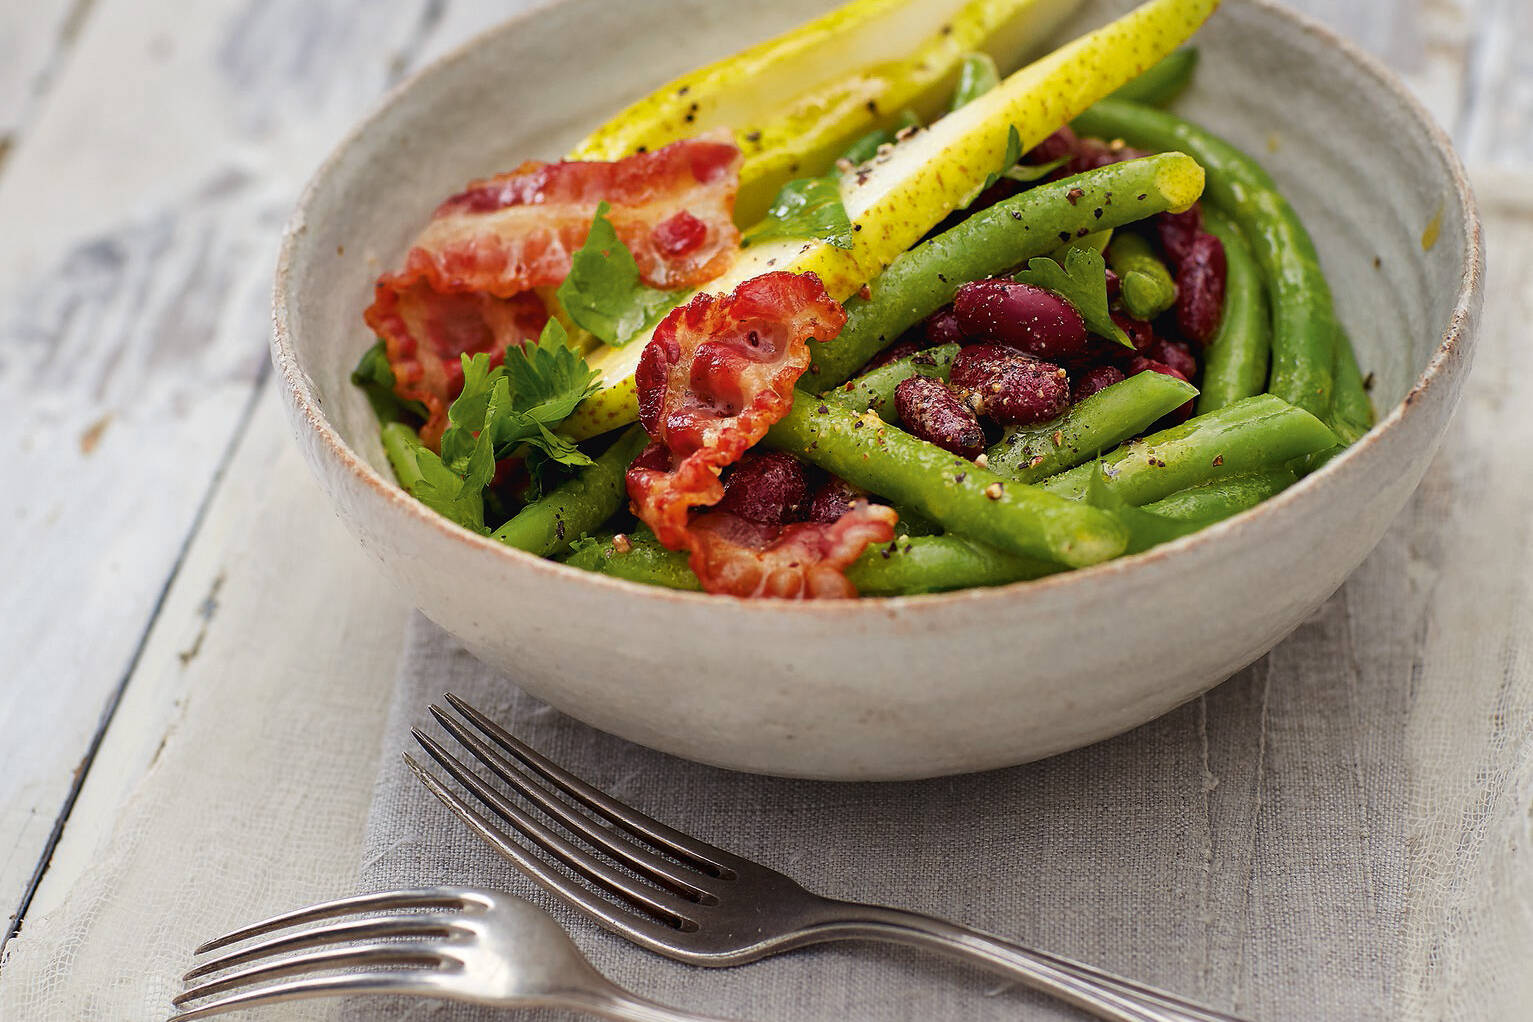 Birnen-Bohnen-Salat mit Senf-Agavensirup-Dressing Rezept | Küchengötter